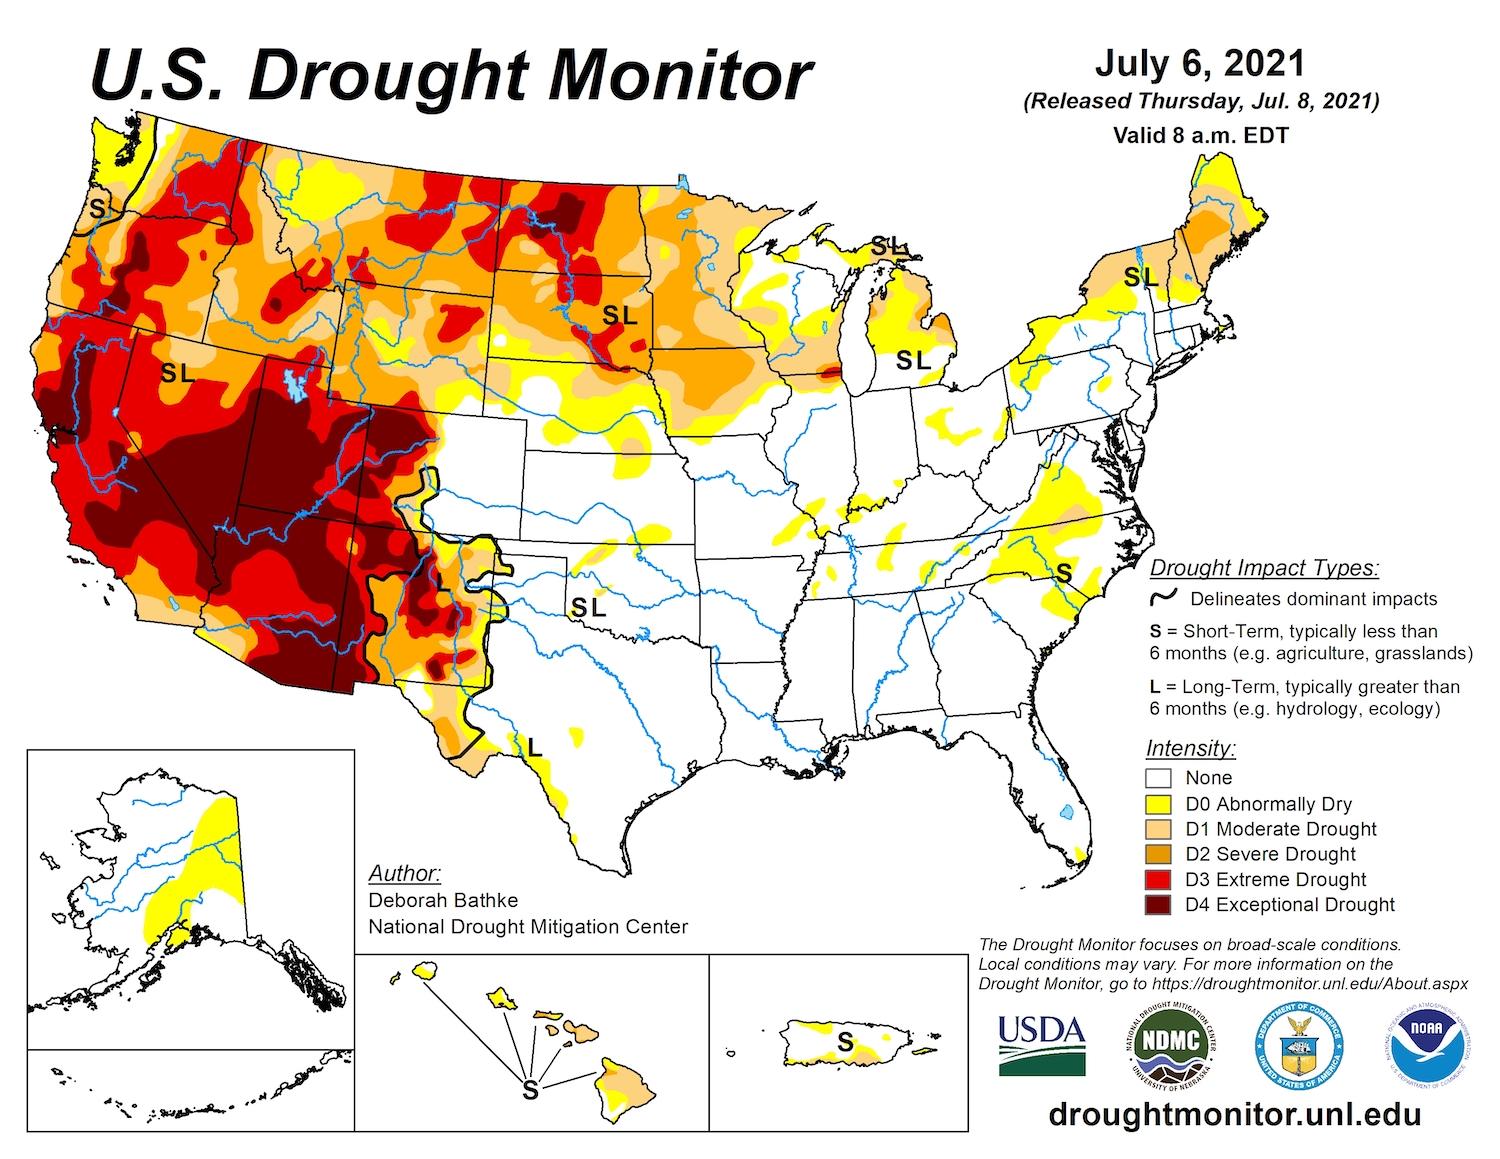  National Drought Mitigation Center